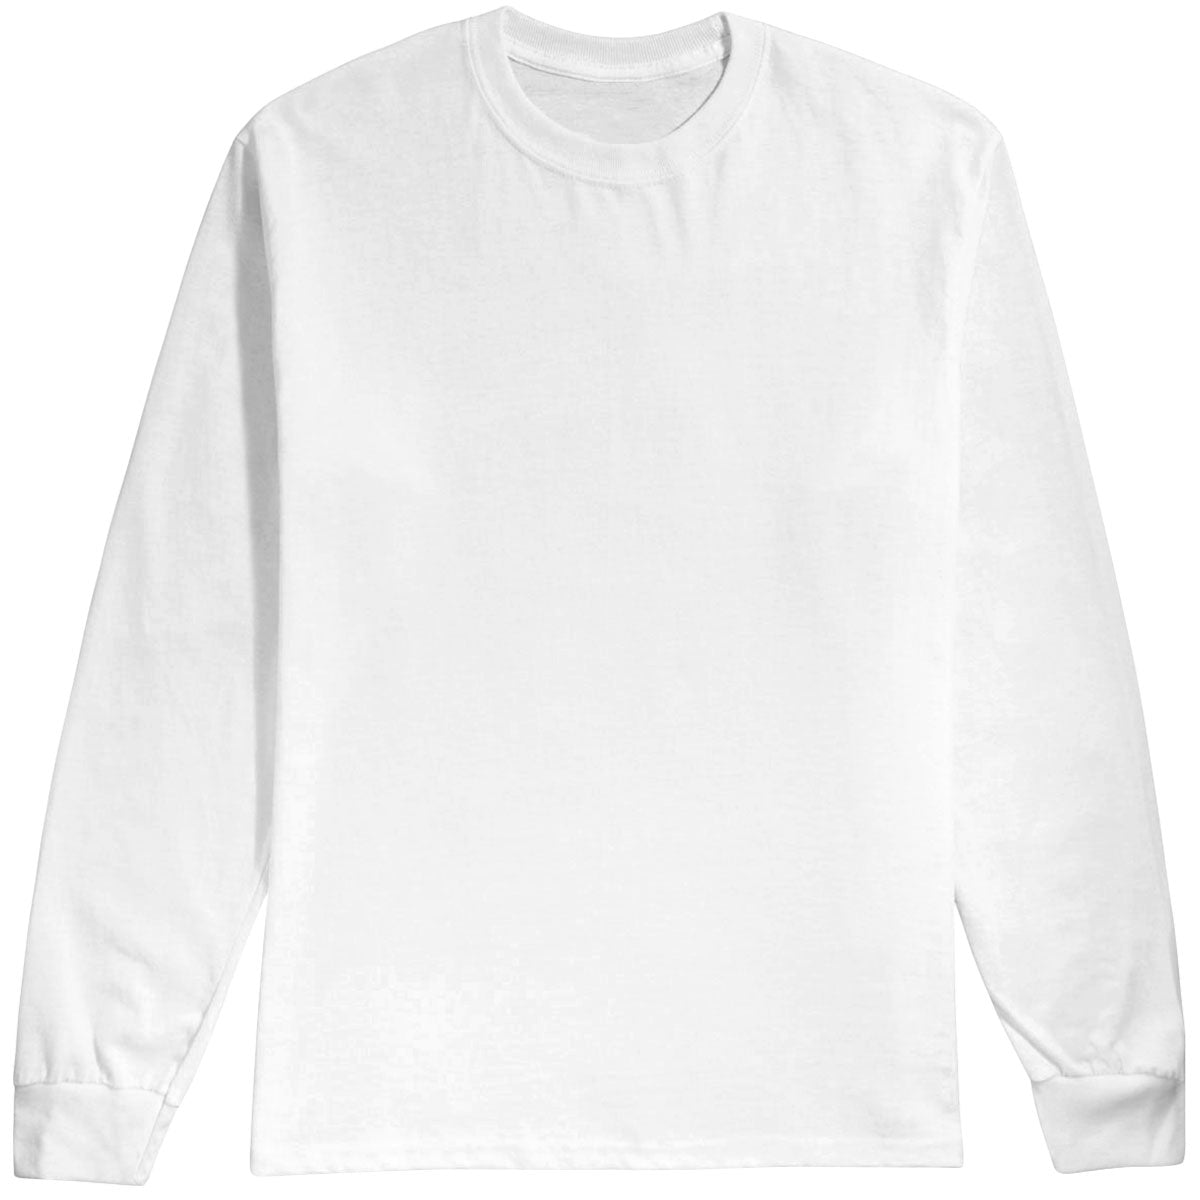 Alien Workshop Triad Sticker Long Sleeve T-Shirt - White - LG image 1